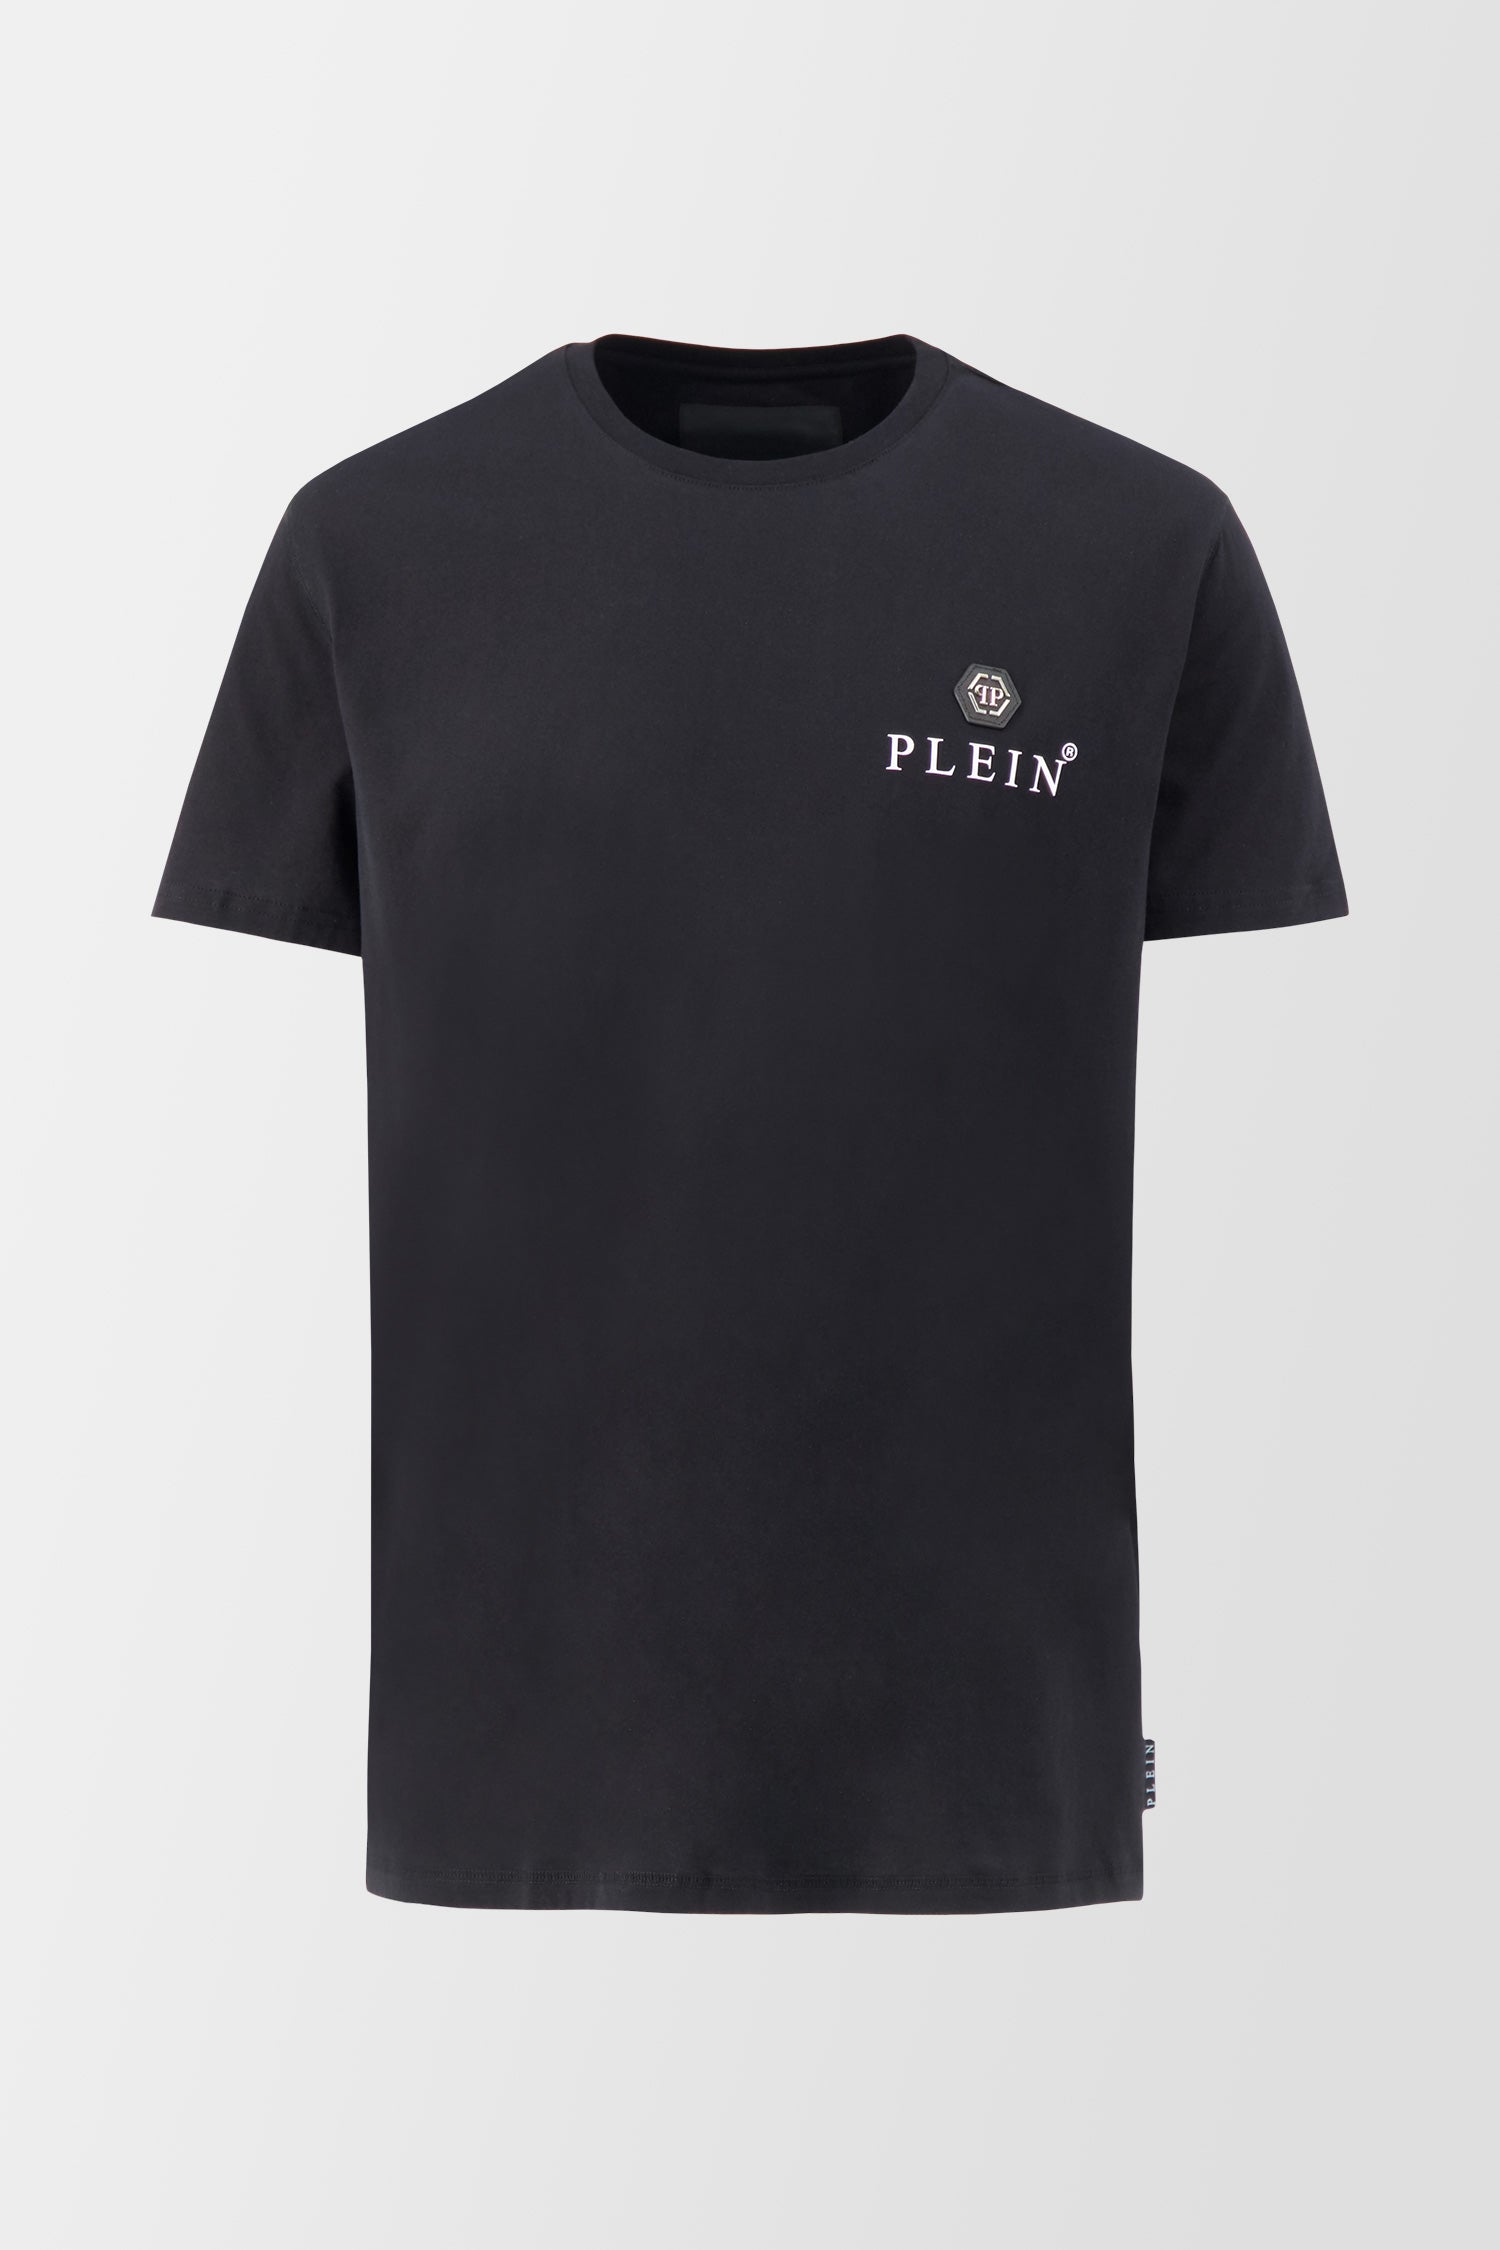 Philipp Plein Black Iconic Plein T-Shirt